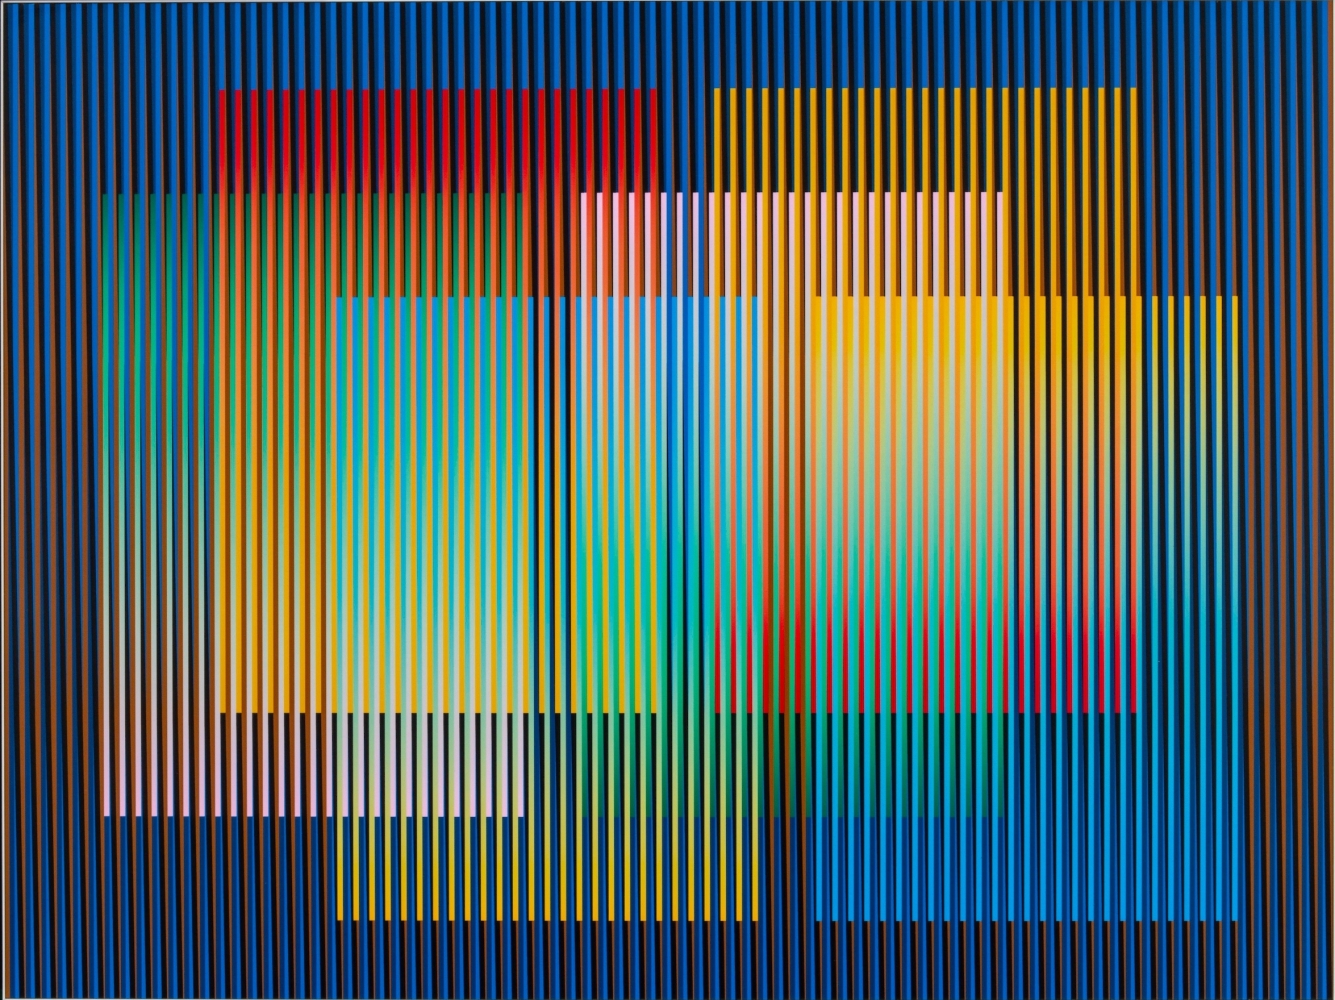 Color Aditivo Panam 8, 2010&amp;nbsp;
Cromography on aluminium
60h x 80w cm
23 79/127h x 31 63/127w in
Edition of 8